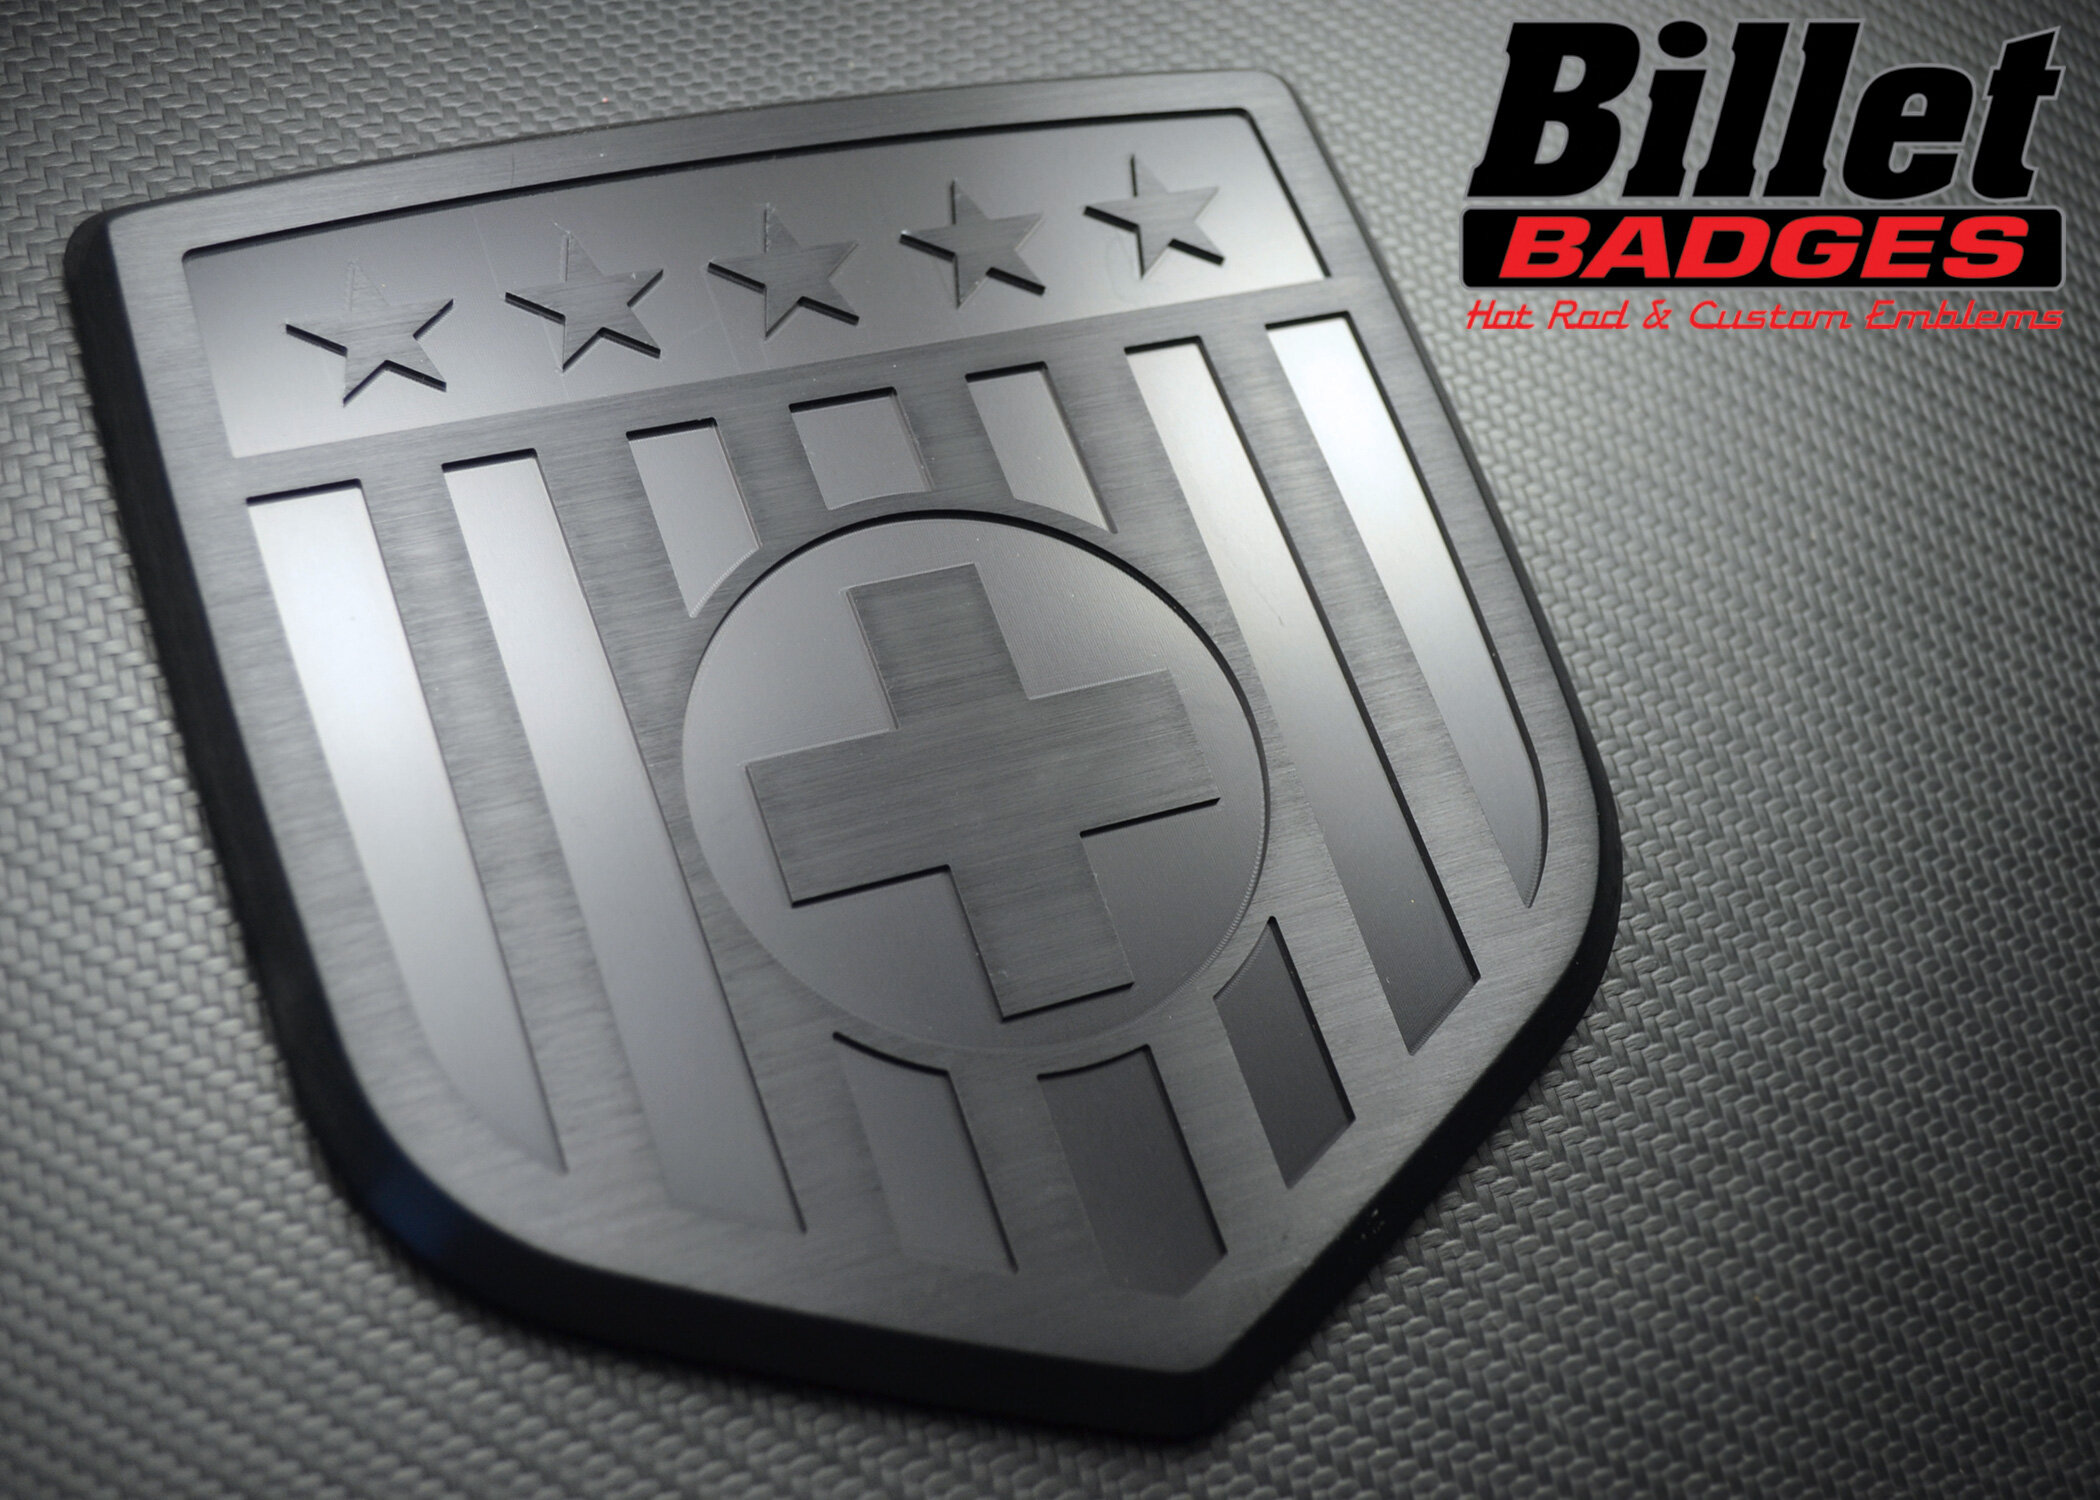 RAM-STYLE SHIELD GALLERY — Billet Badges Inc.